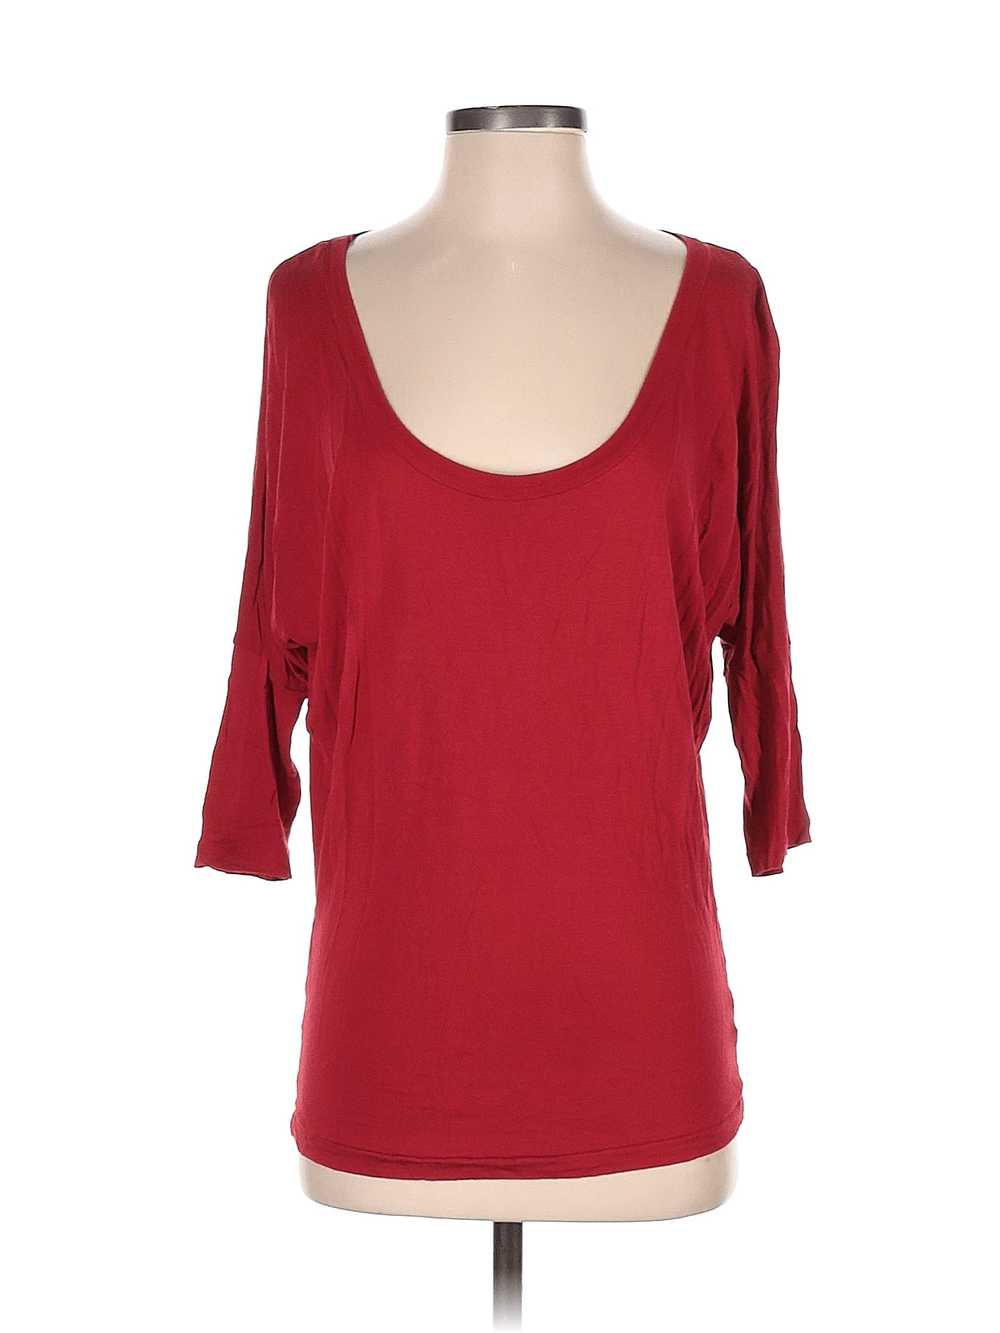 American Apparel Women Red Long Sleeve T-Shirt XS - image 1